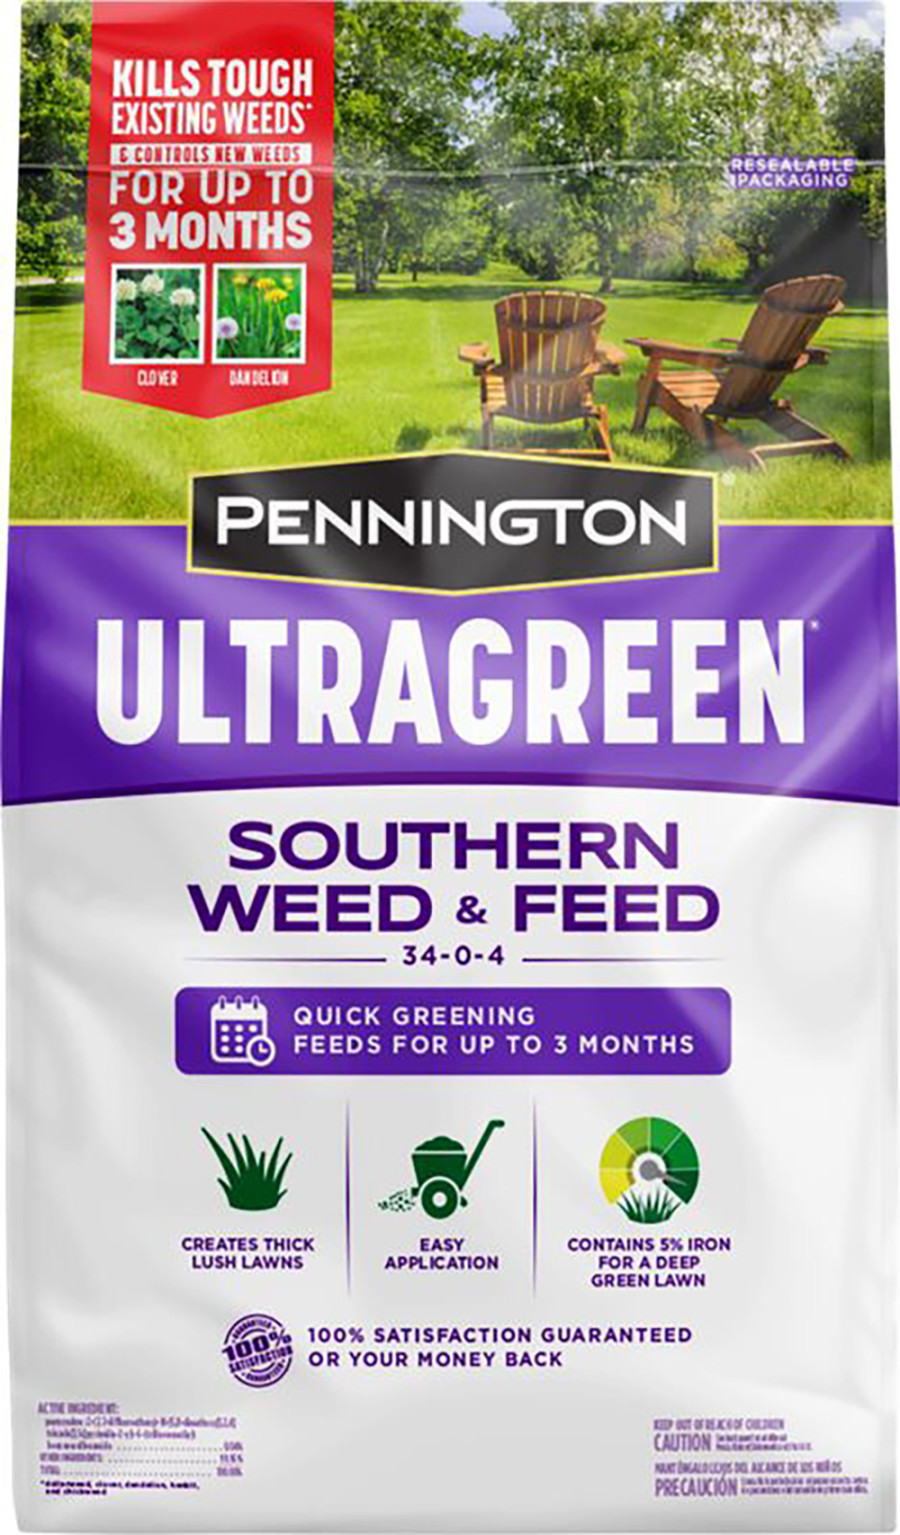 Pennington Ultragreen Southern Weed & Feed 34-0-4 1ea/10M 25 lb